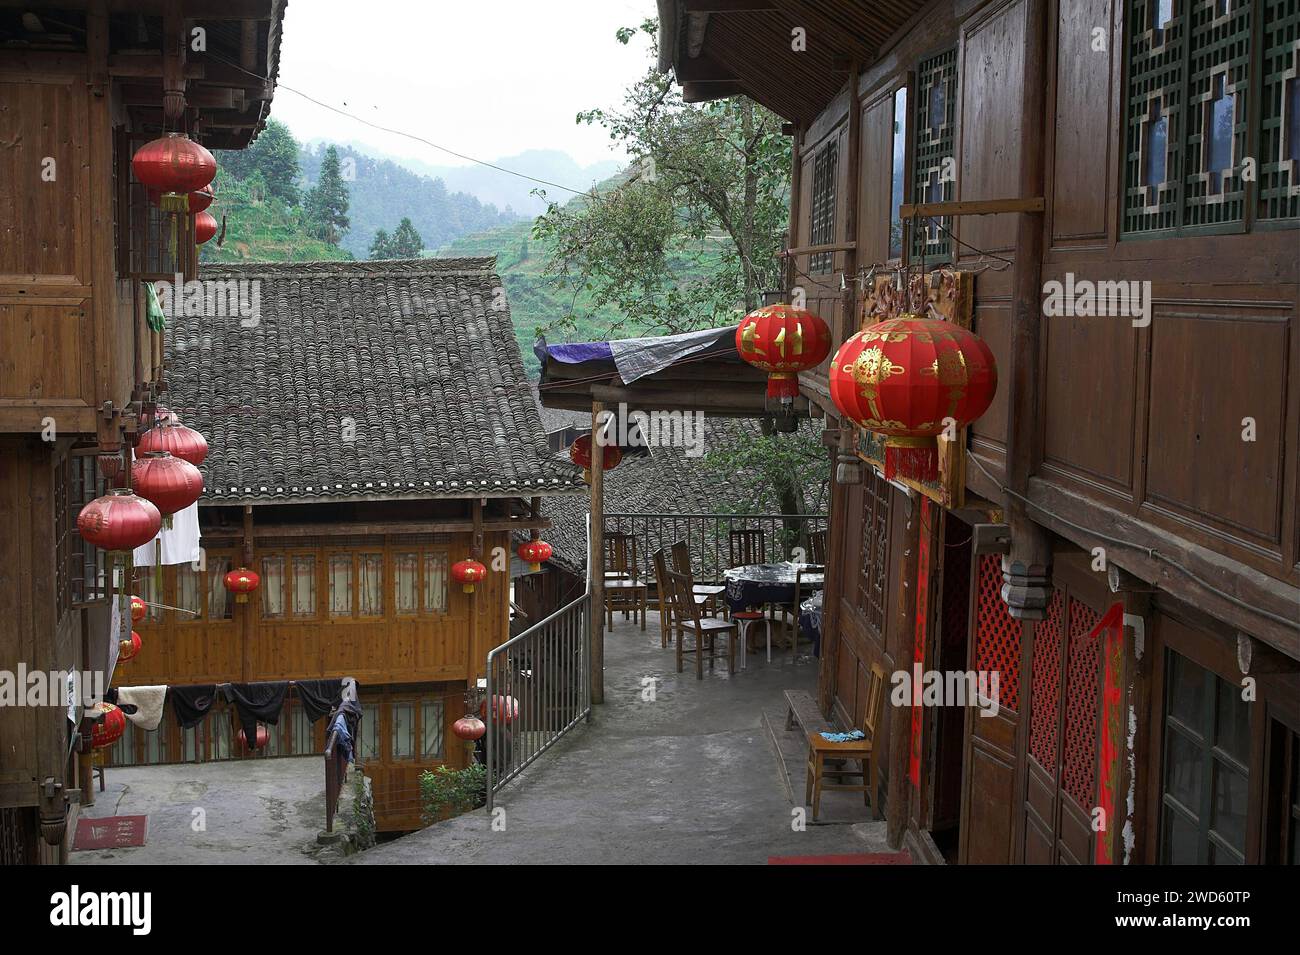 龙胜镇 (龙胜县) 中國 Longsheng, Dazhai Longji Ping'an Zhuang, China; Restaurant im chinesischen Dorf; Restaurant im chinesischen Dorf Stockfoto